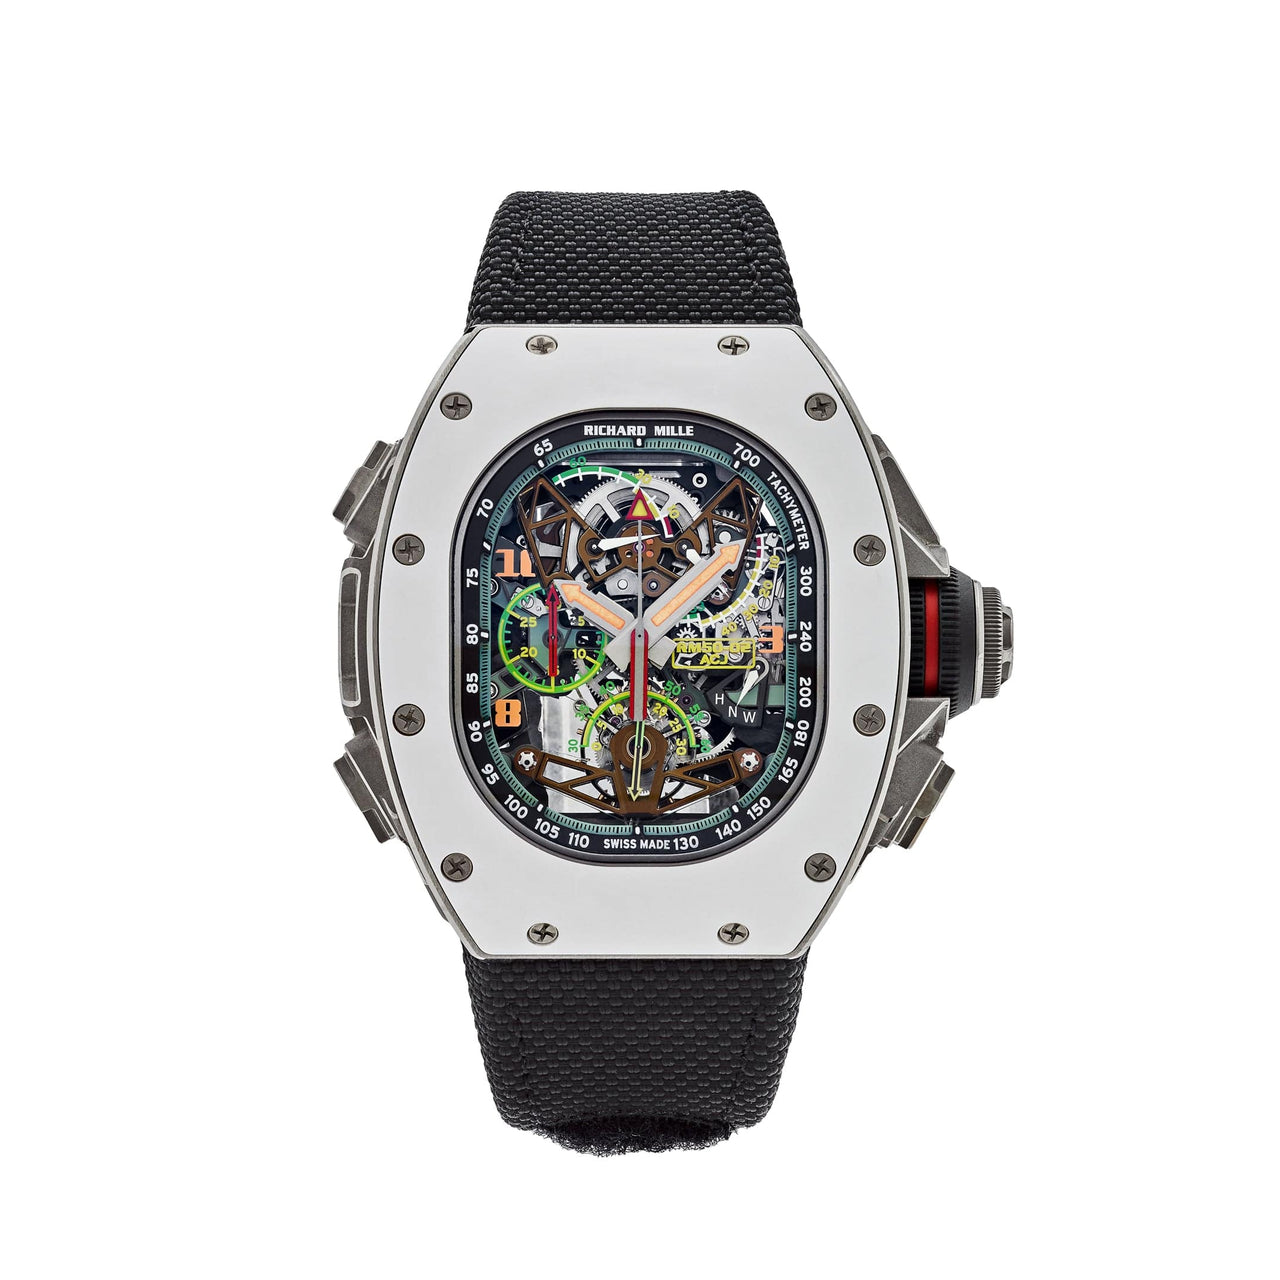 Richard Mille Tourbillon Split-Seconds Chronograph Airbus Titanium/Aluminum LE RM50-02 Wrist Aficionado